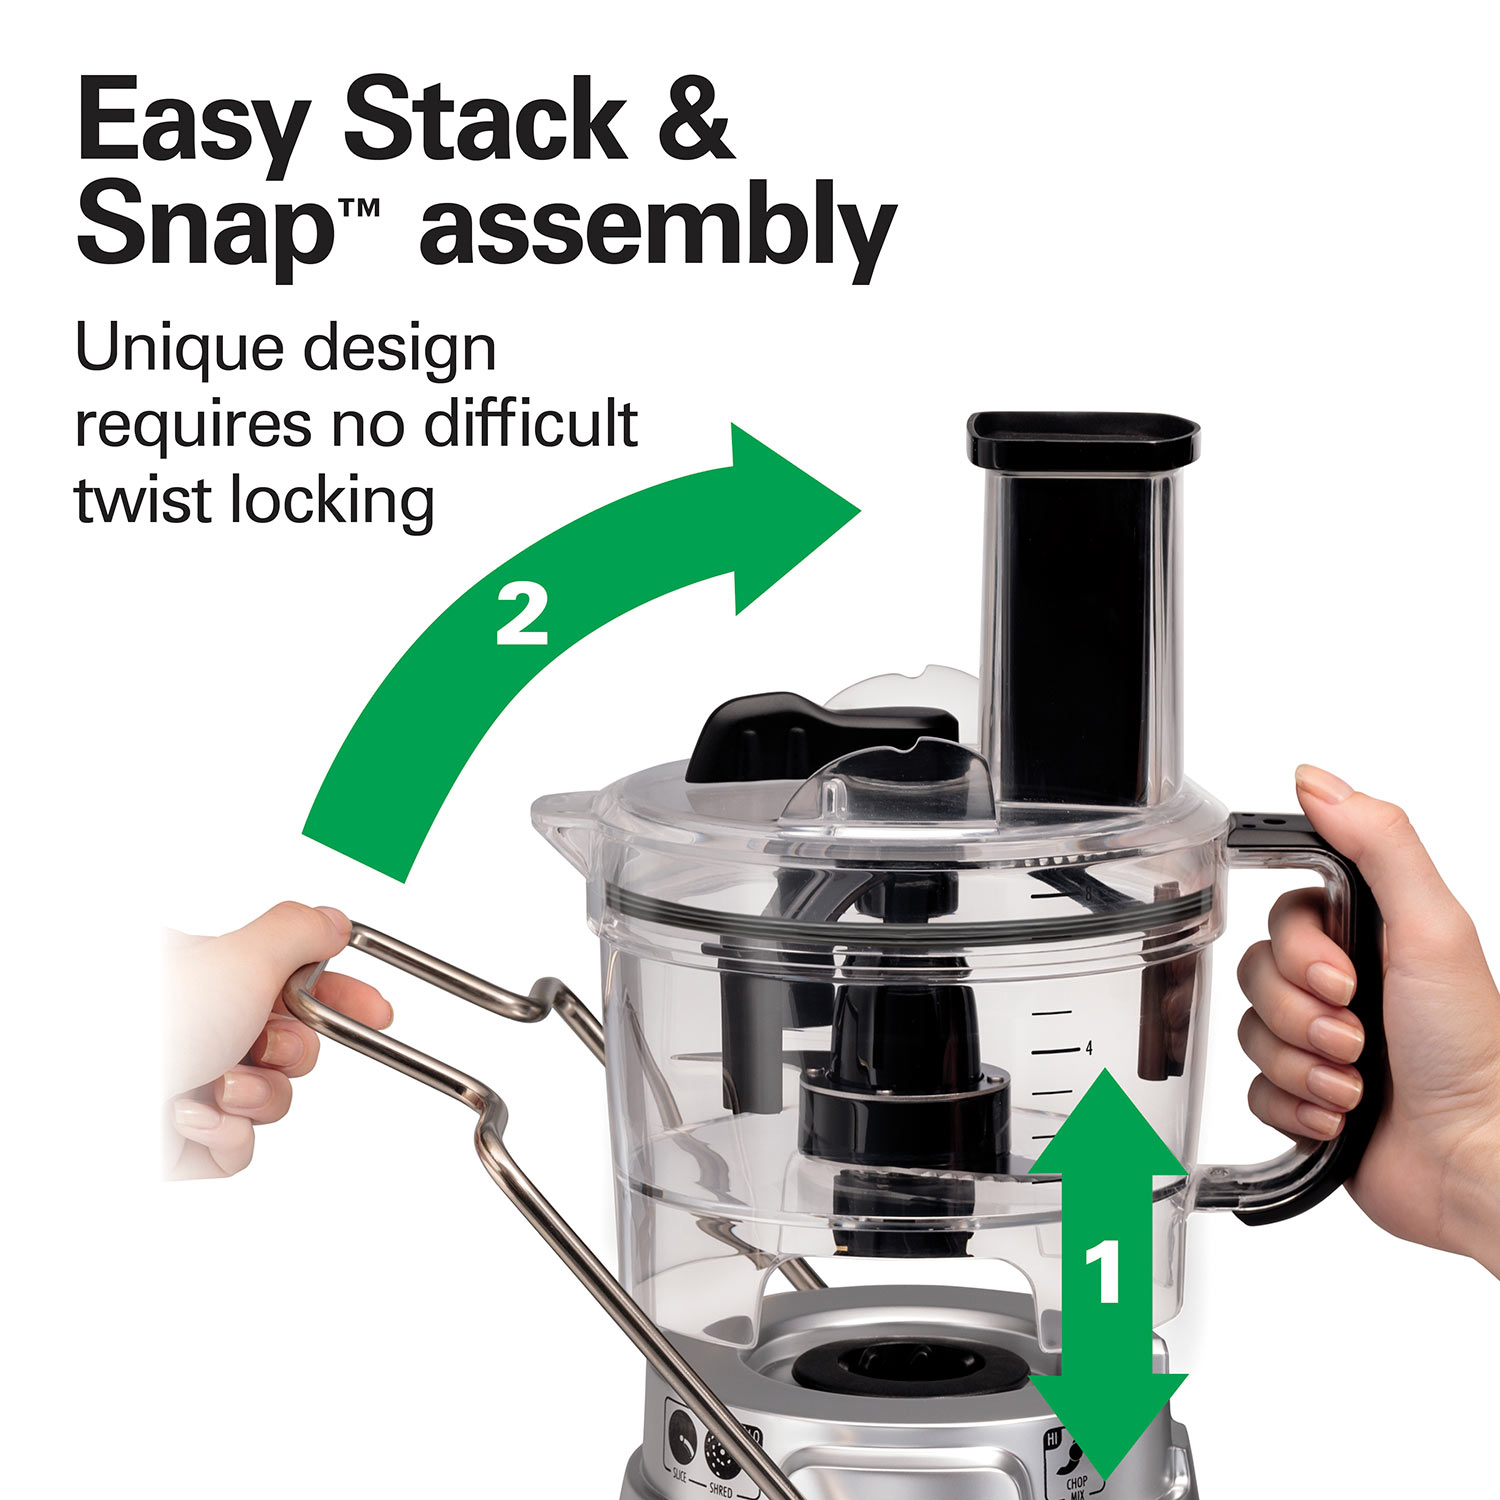 Hamilton Beach Stack & Snap Food Processor with Bowl Scraper, 10 Cup  Capacity, Black, New, 70822F 